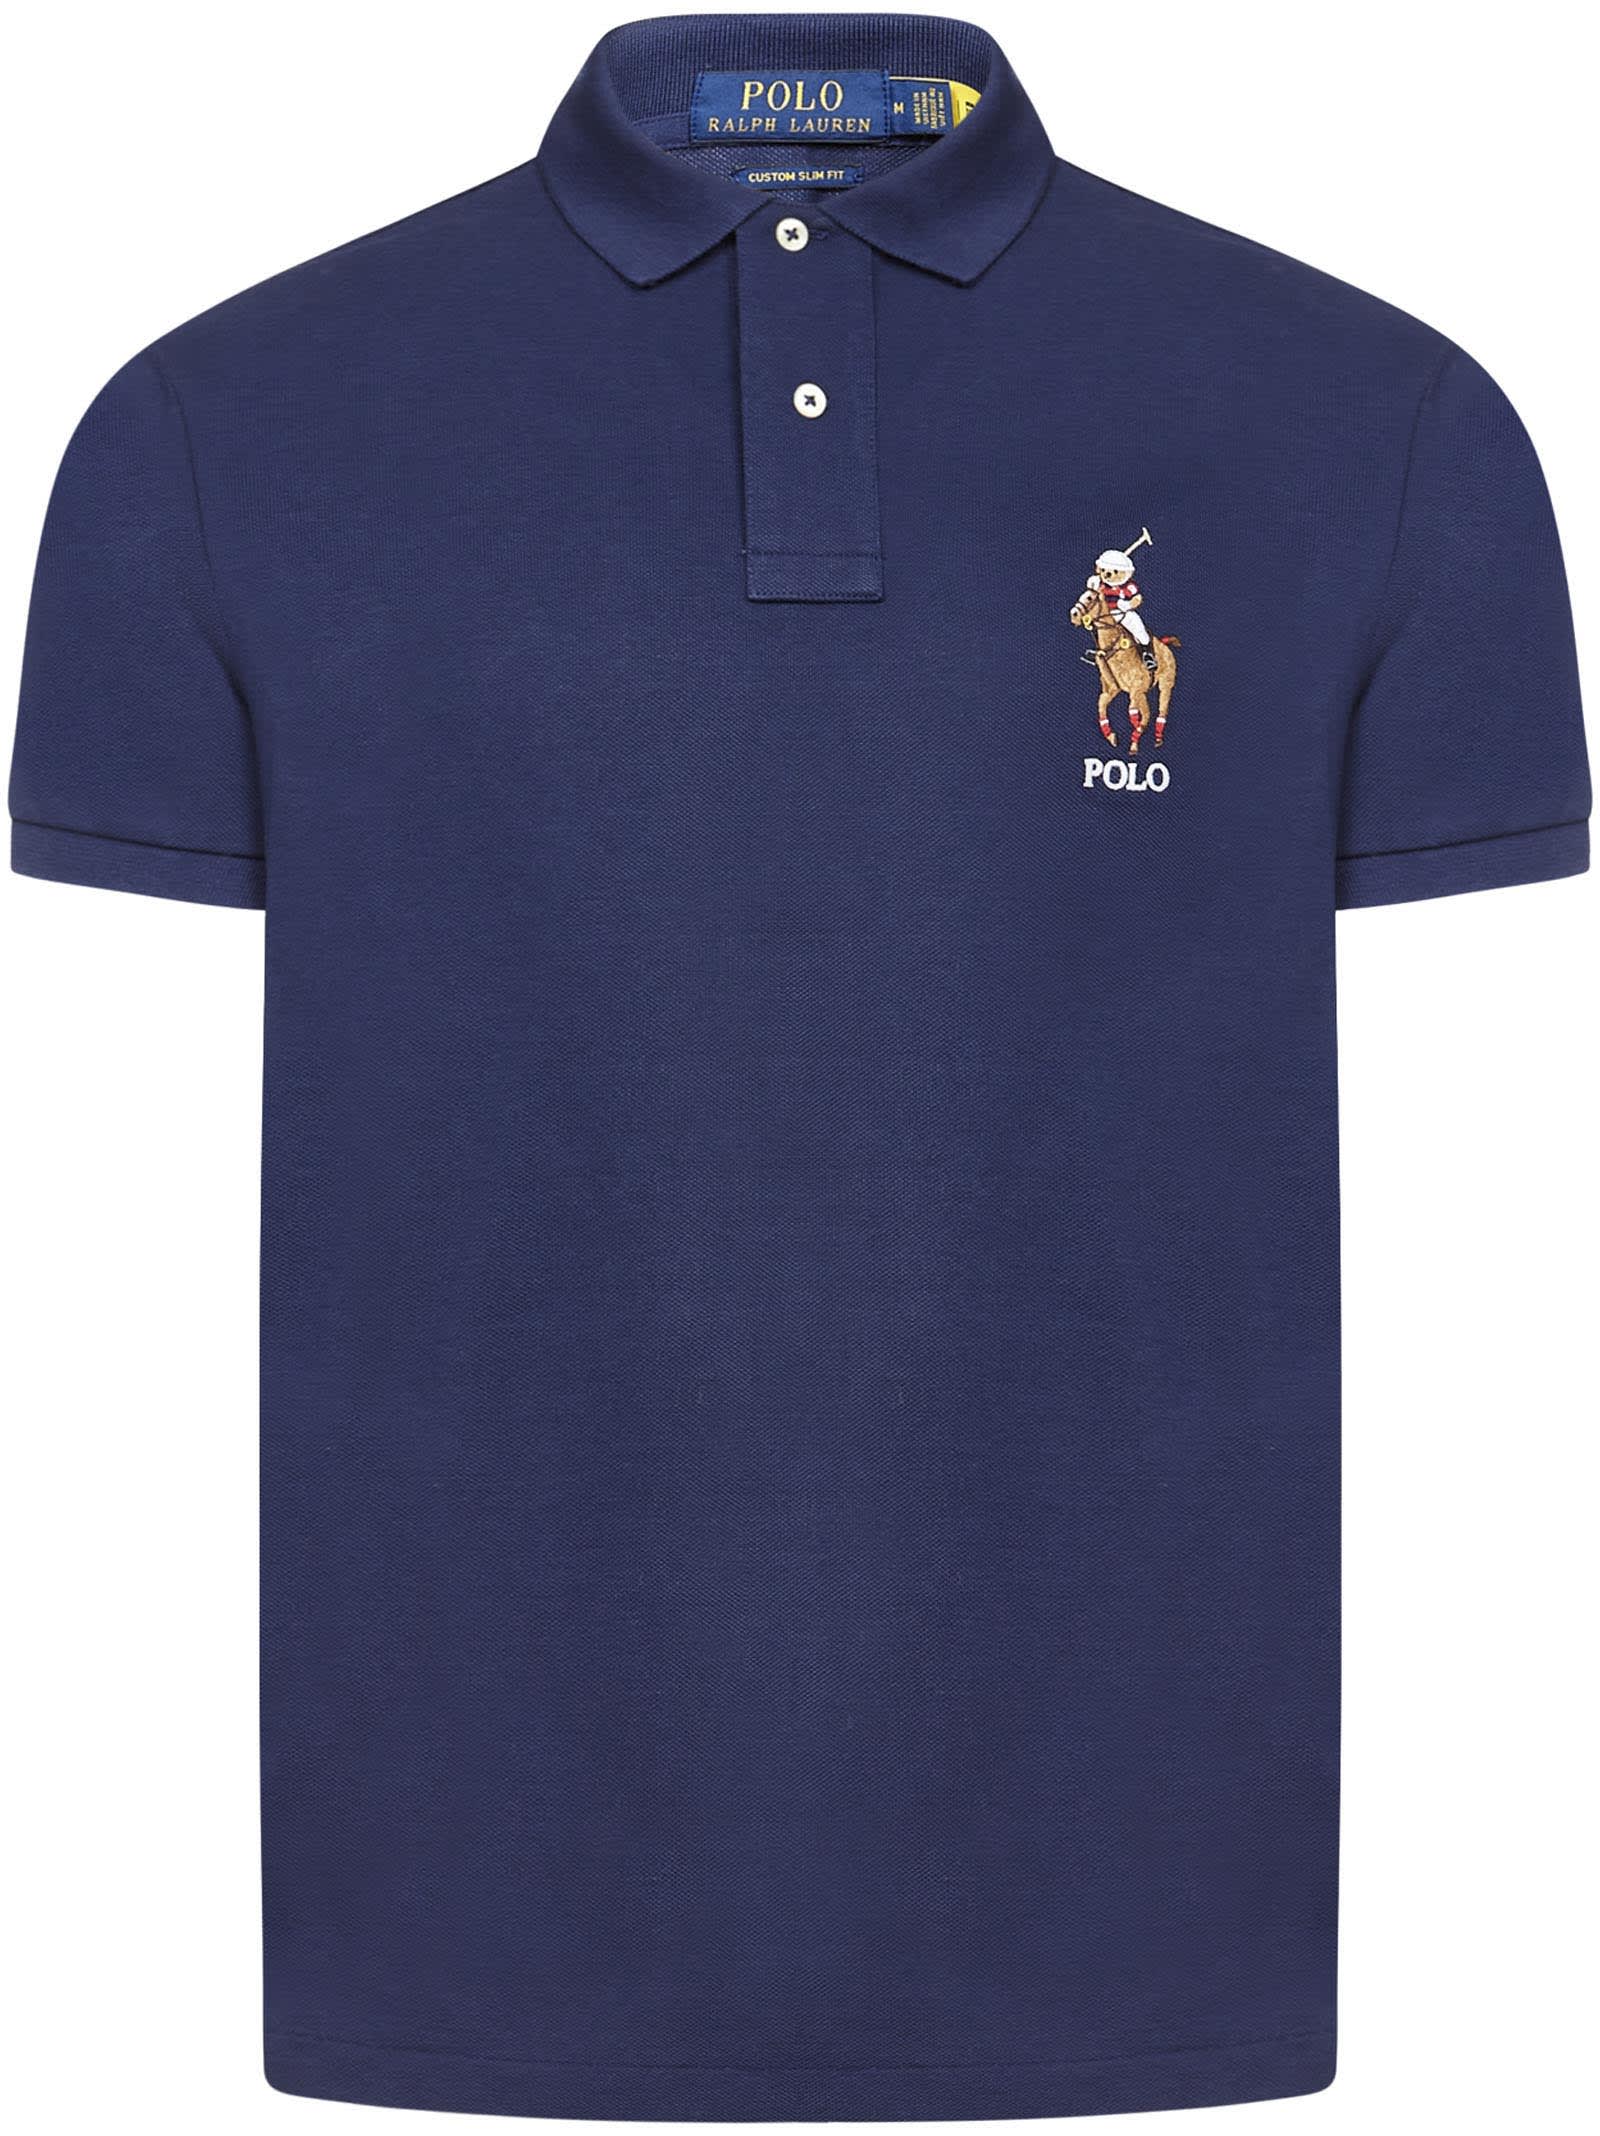 Ralph Lauren Polo Bear Polo Shirt